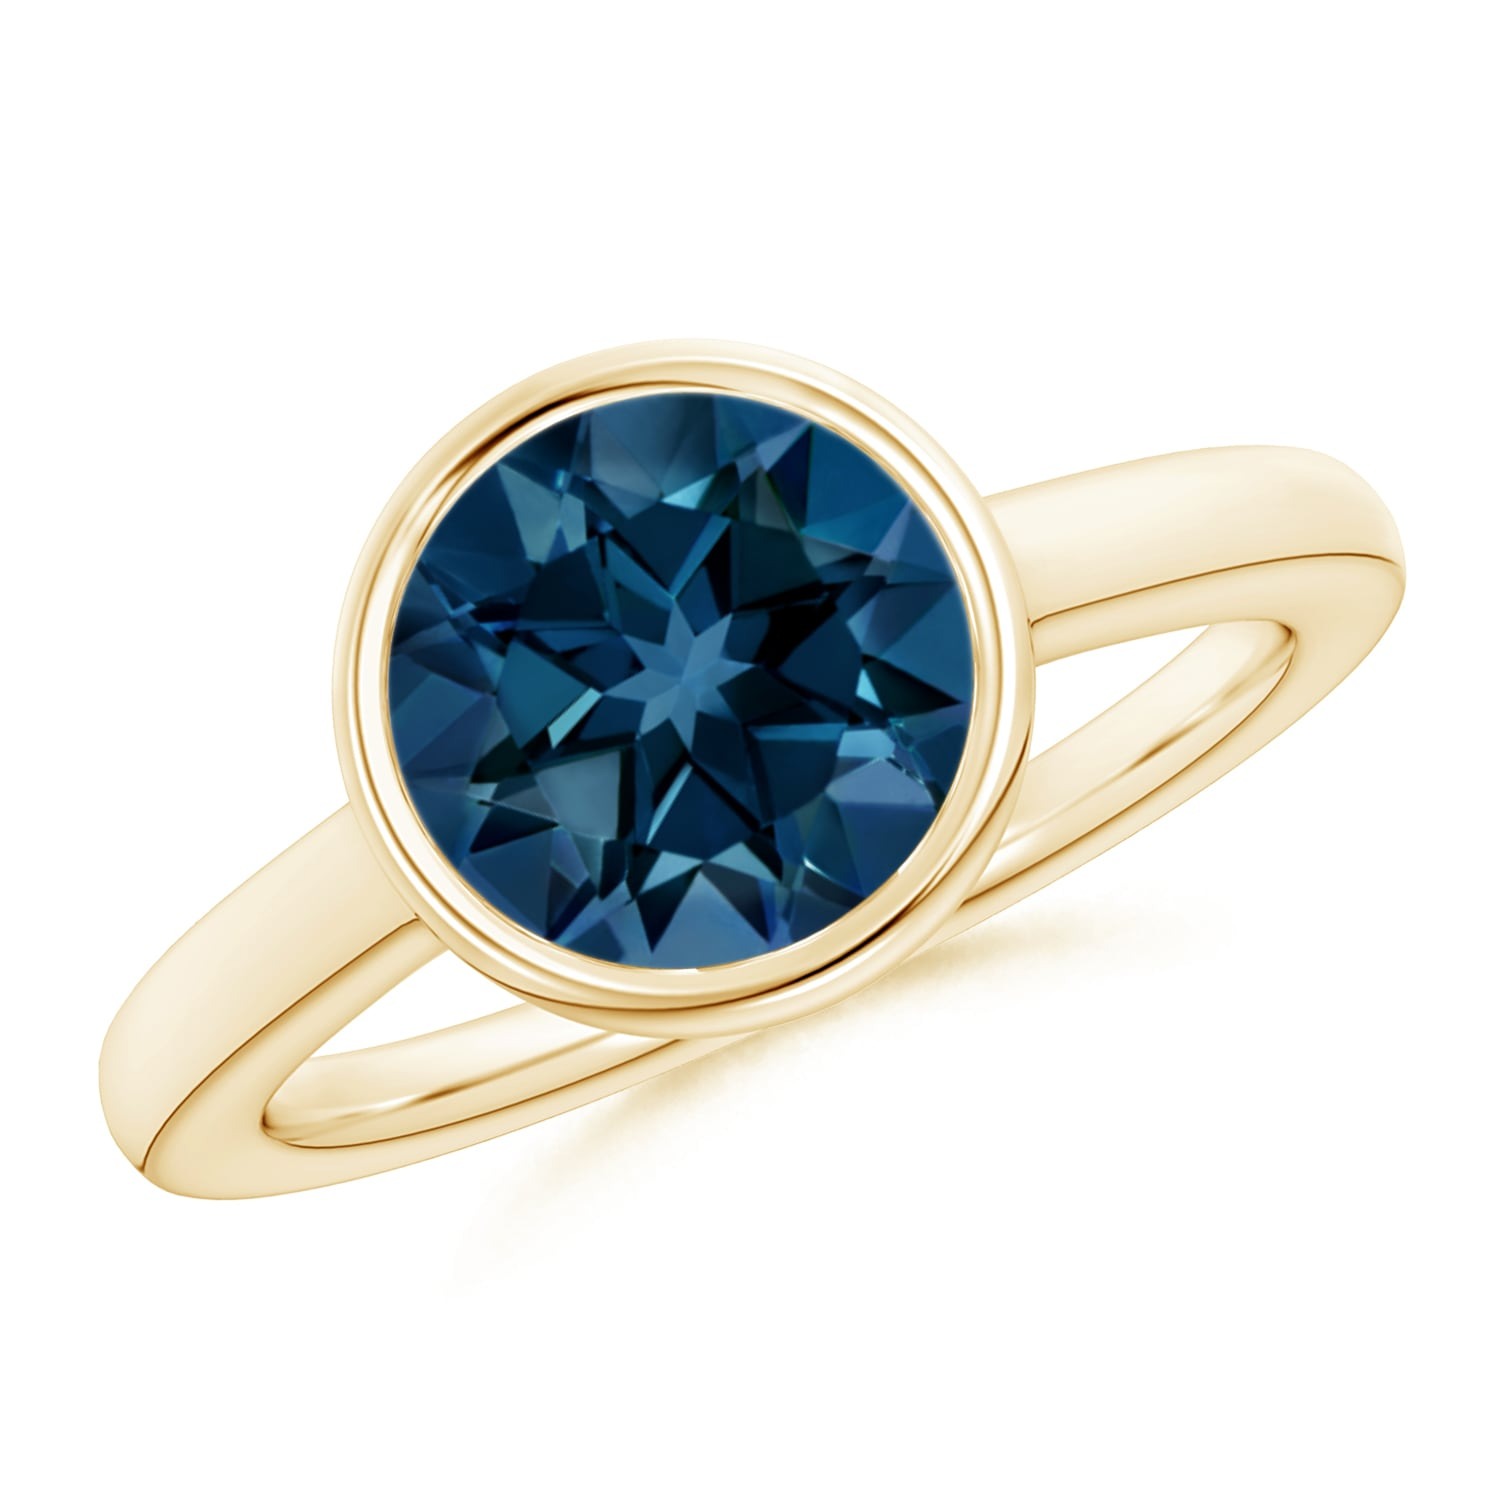 bezel set London blue topaz gemstone non diamond engagement ring with a yellow gold band